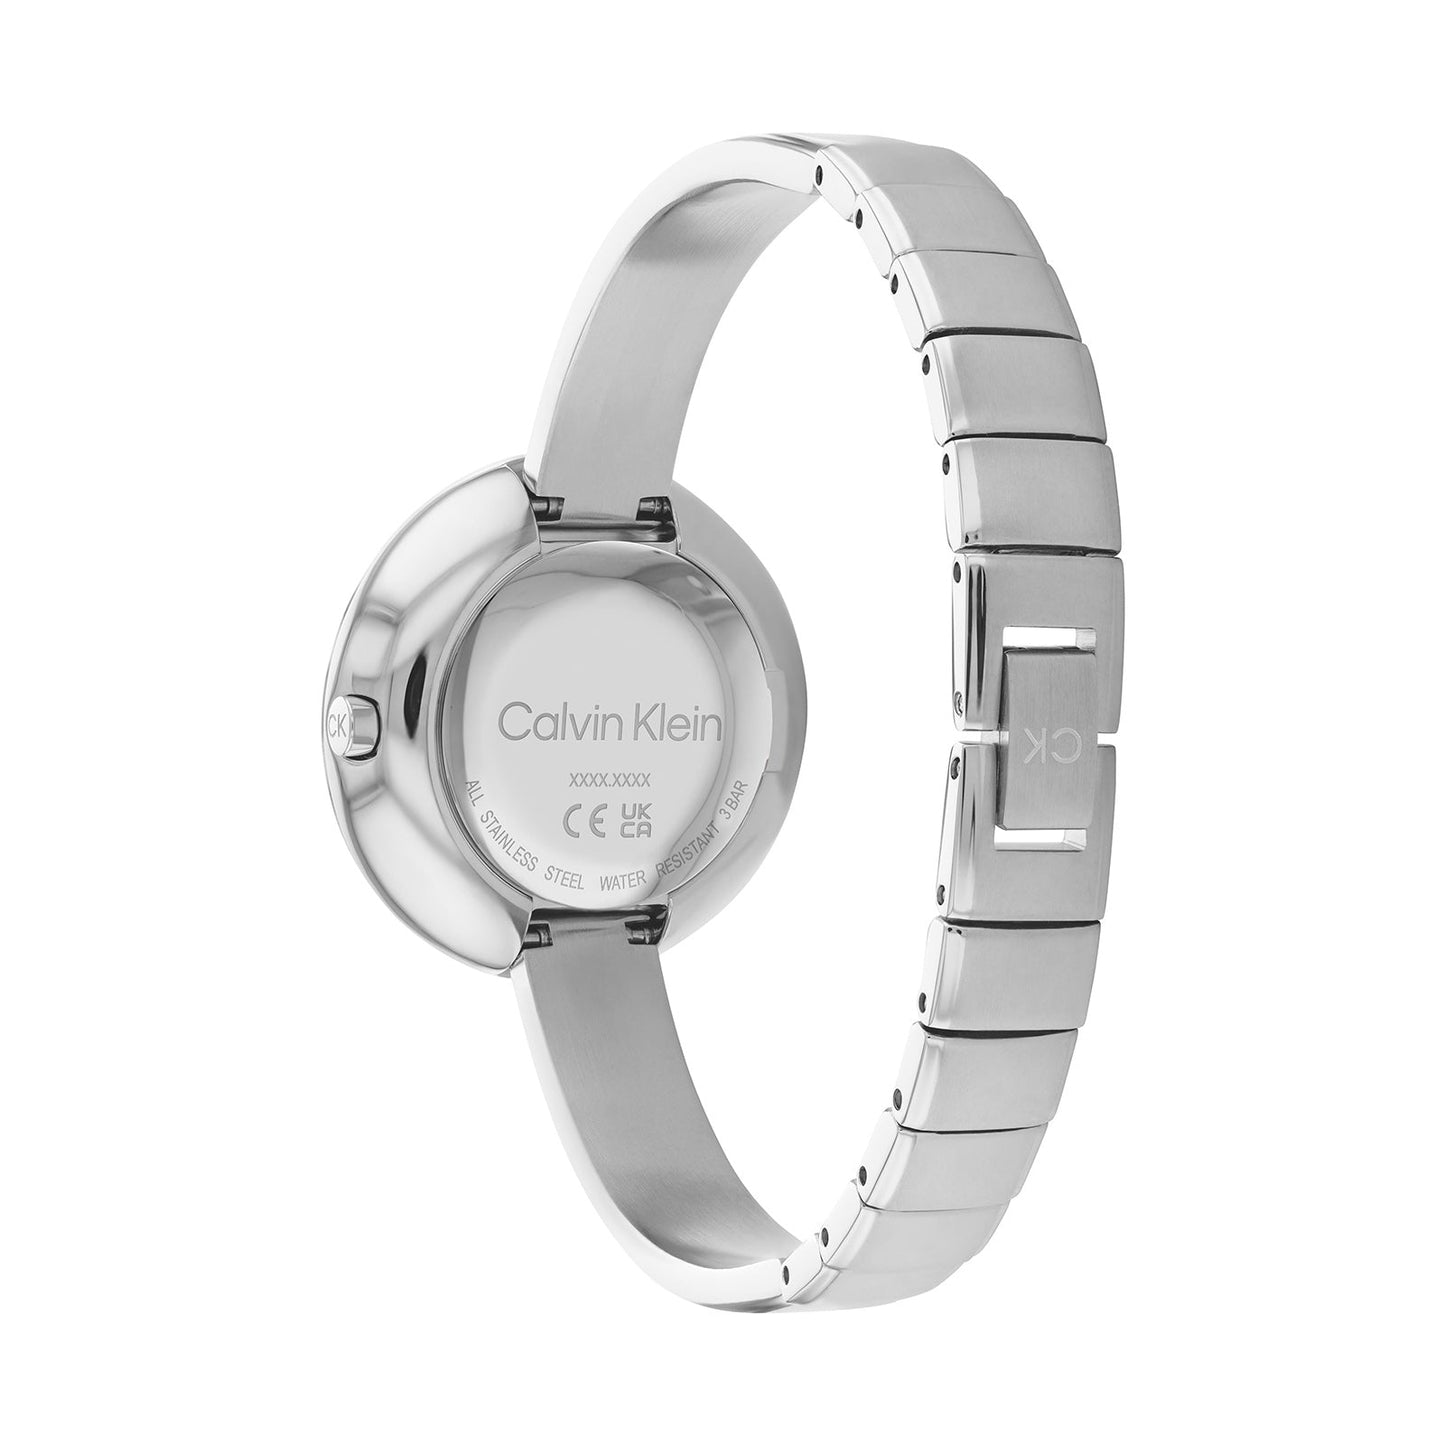 Calvin Klein 25200022 Women's Steel Watch